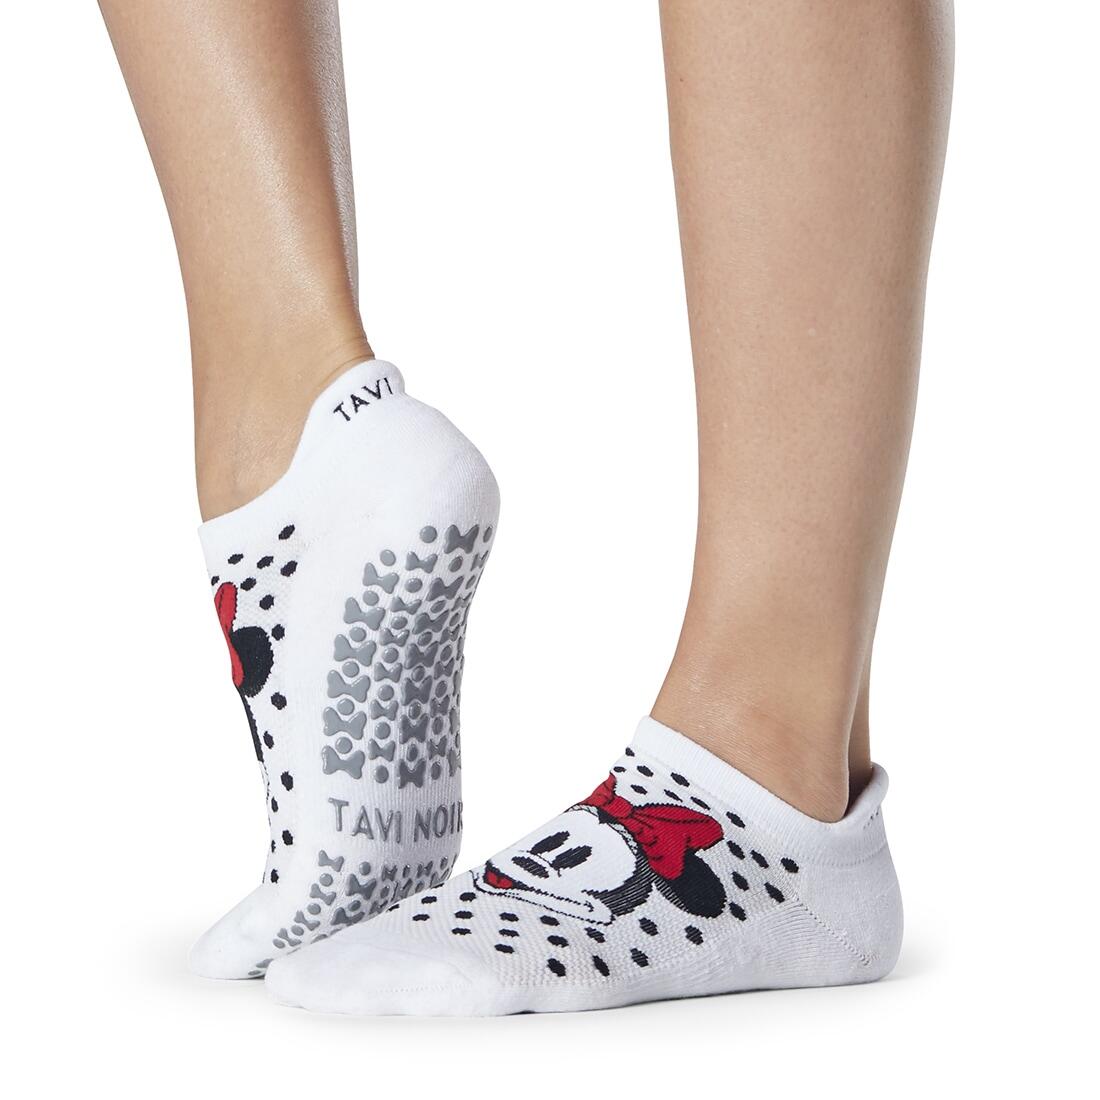 FITNESS-MAD Womens/Ladies Savvy Polka Dot Minnie Mouse Disney Liner Socks (White)